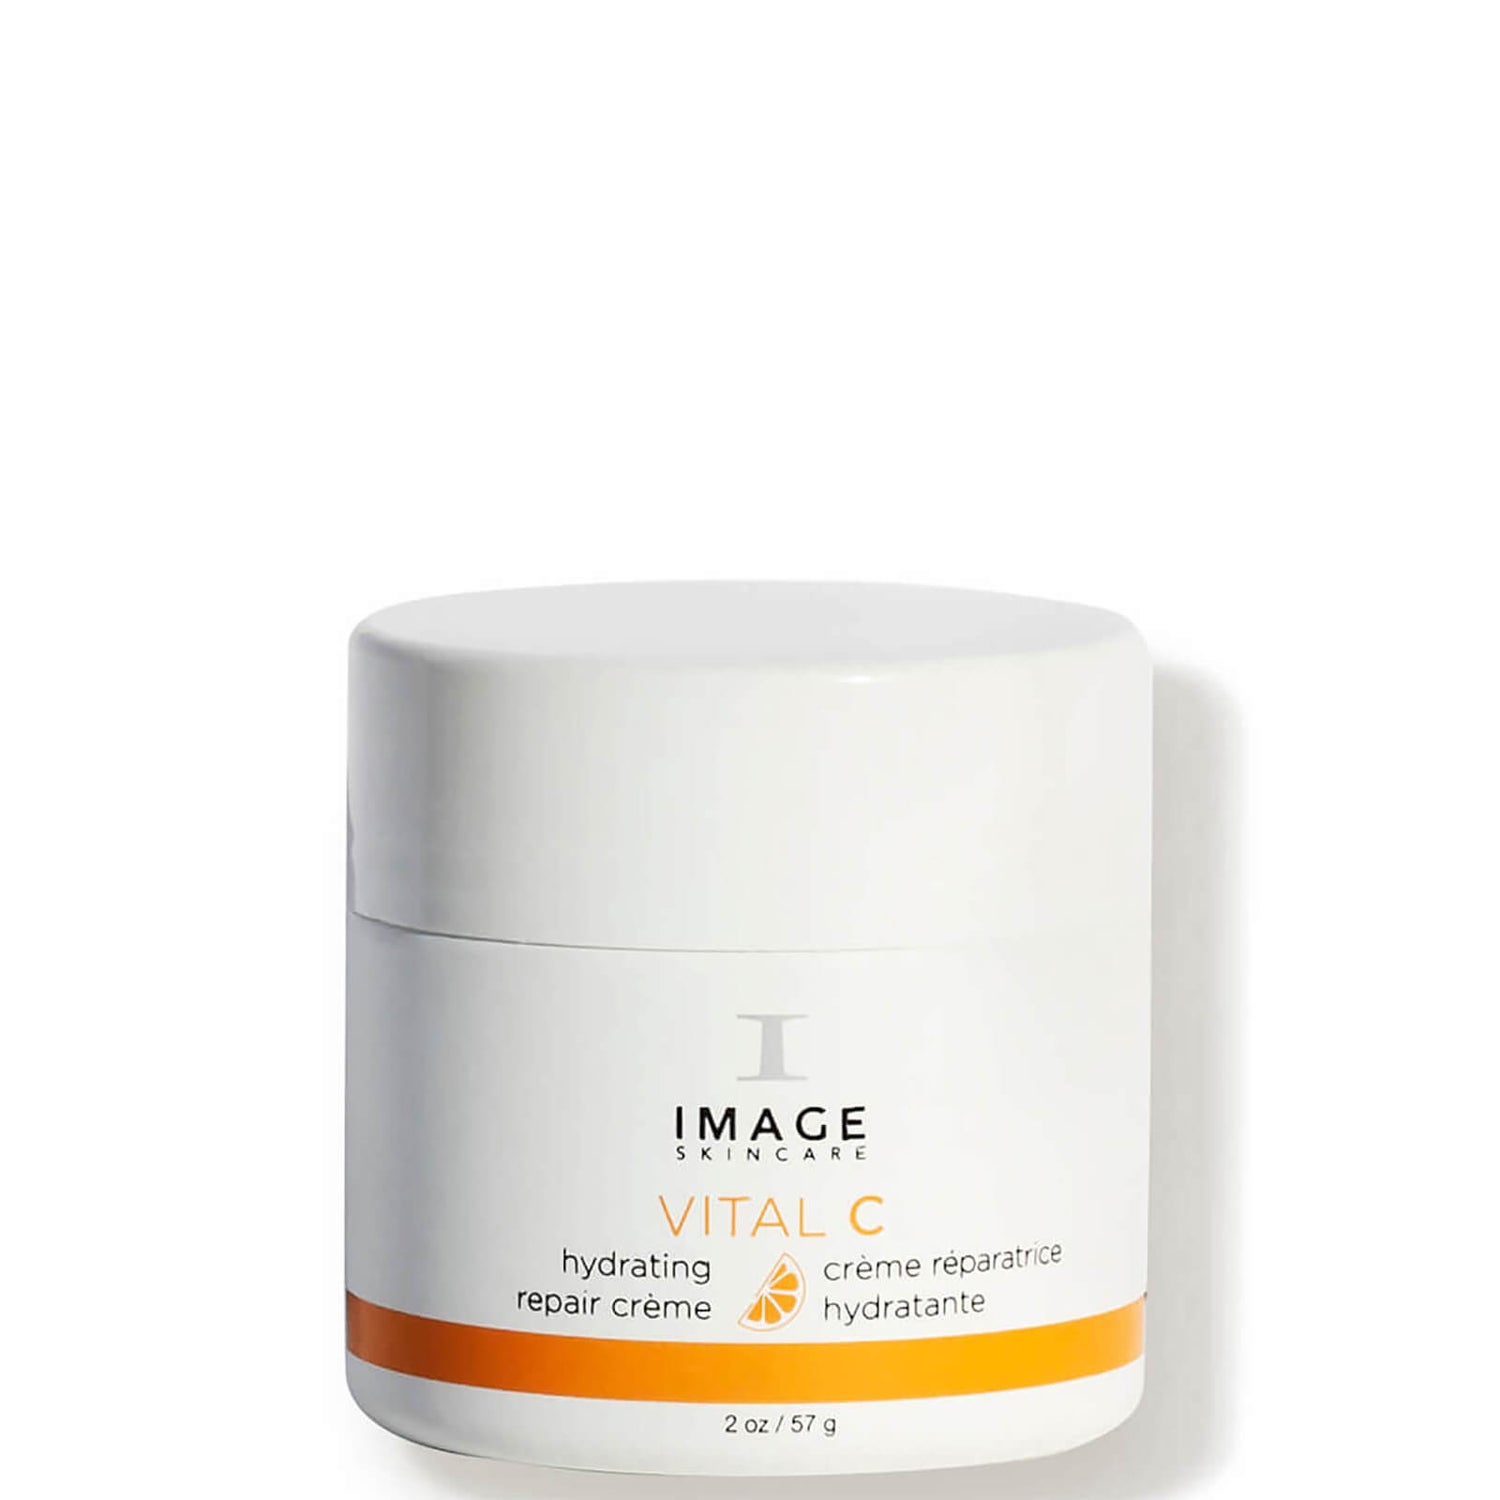 IMAGE Skincare VITAL C Hydrating Repair Crème 2 fl. oz